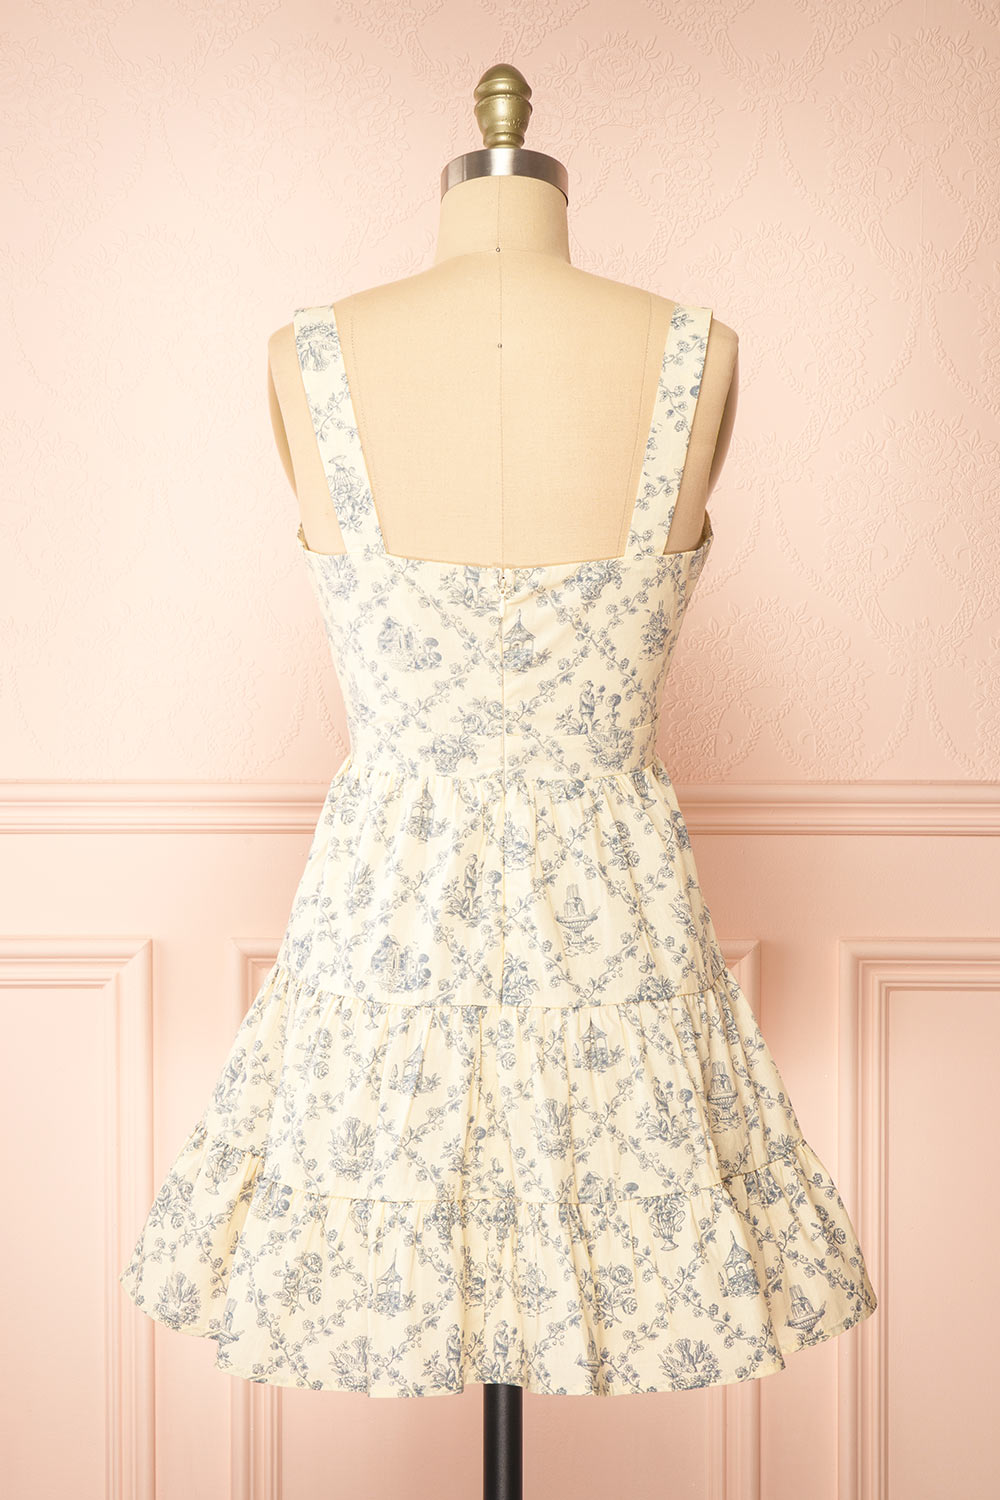 Selvina Short Beige Dress w/ Vintage Motif | Boutique 1861  back view